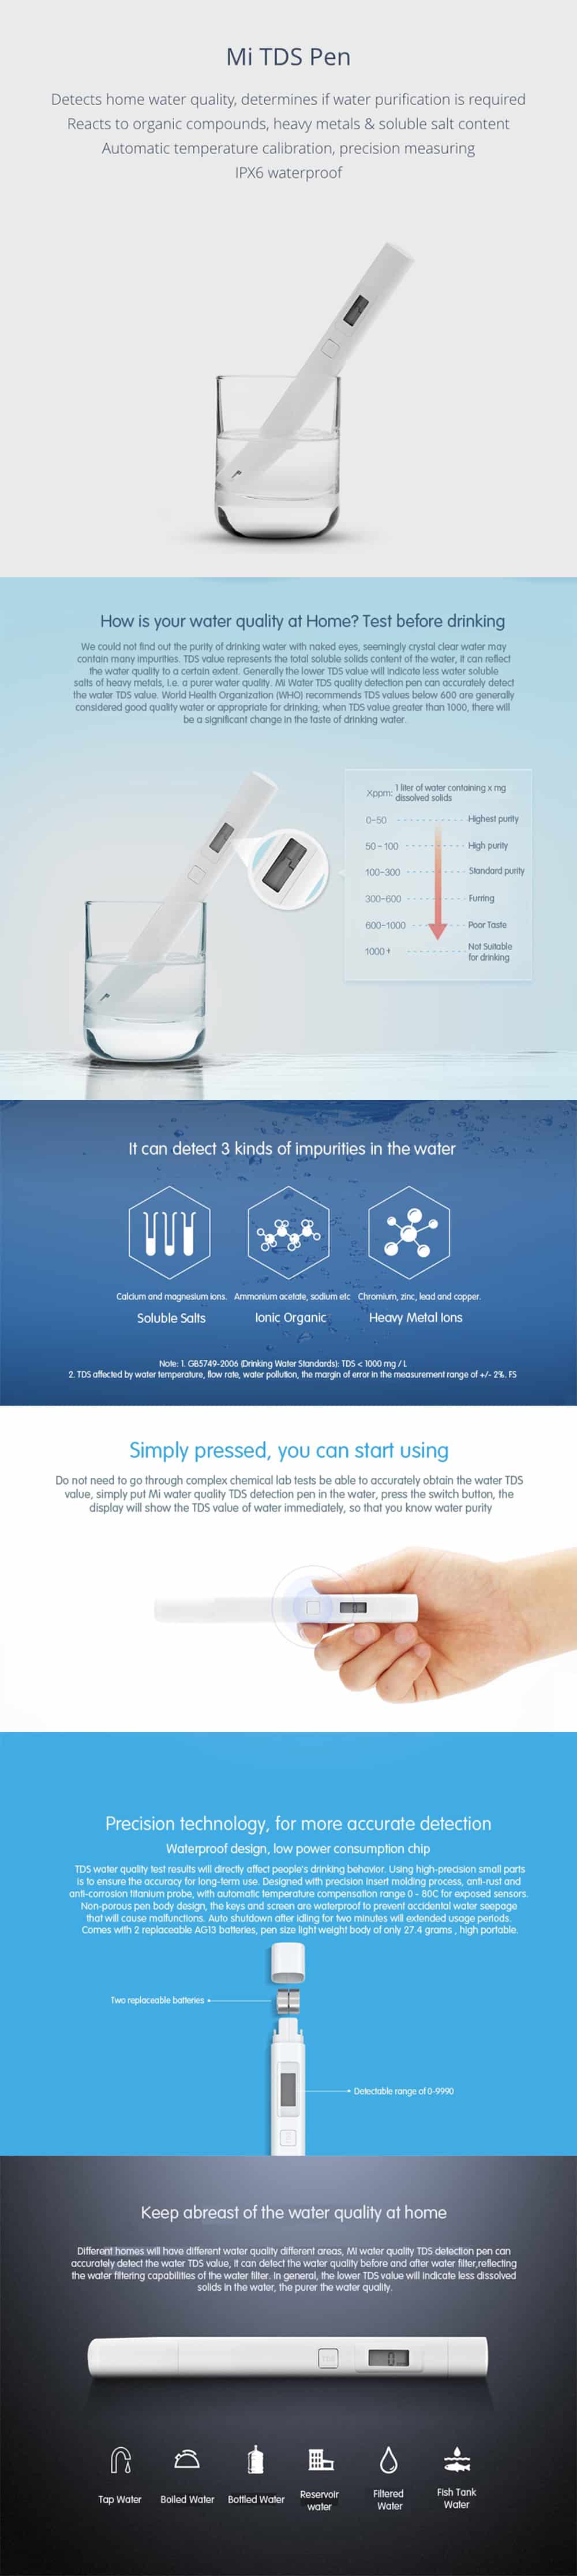 Xiaomi Mi TDS Water Quality Meter Testing Pen 2